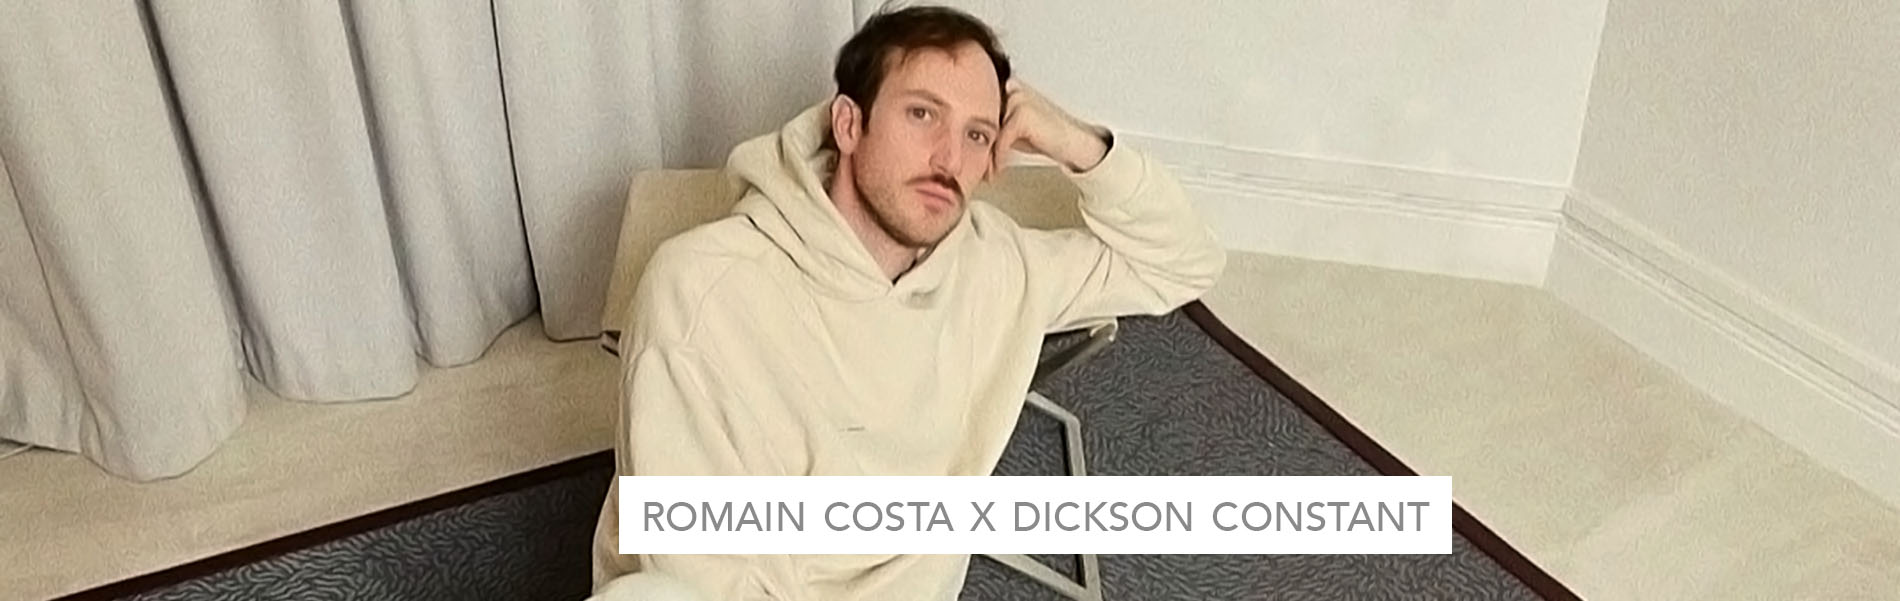 Romain Costa showcases his Dickson rug on Instagram